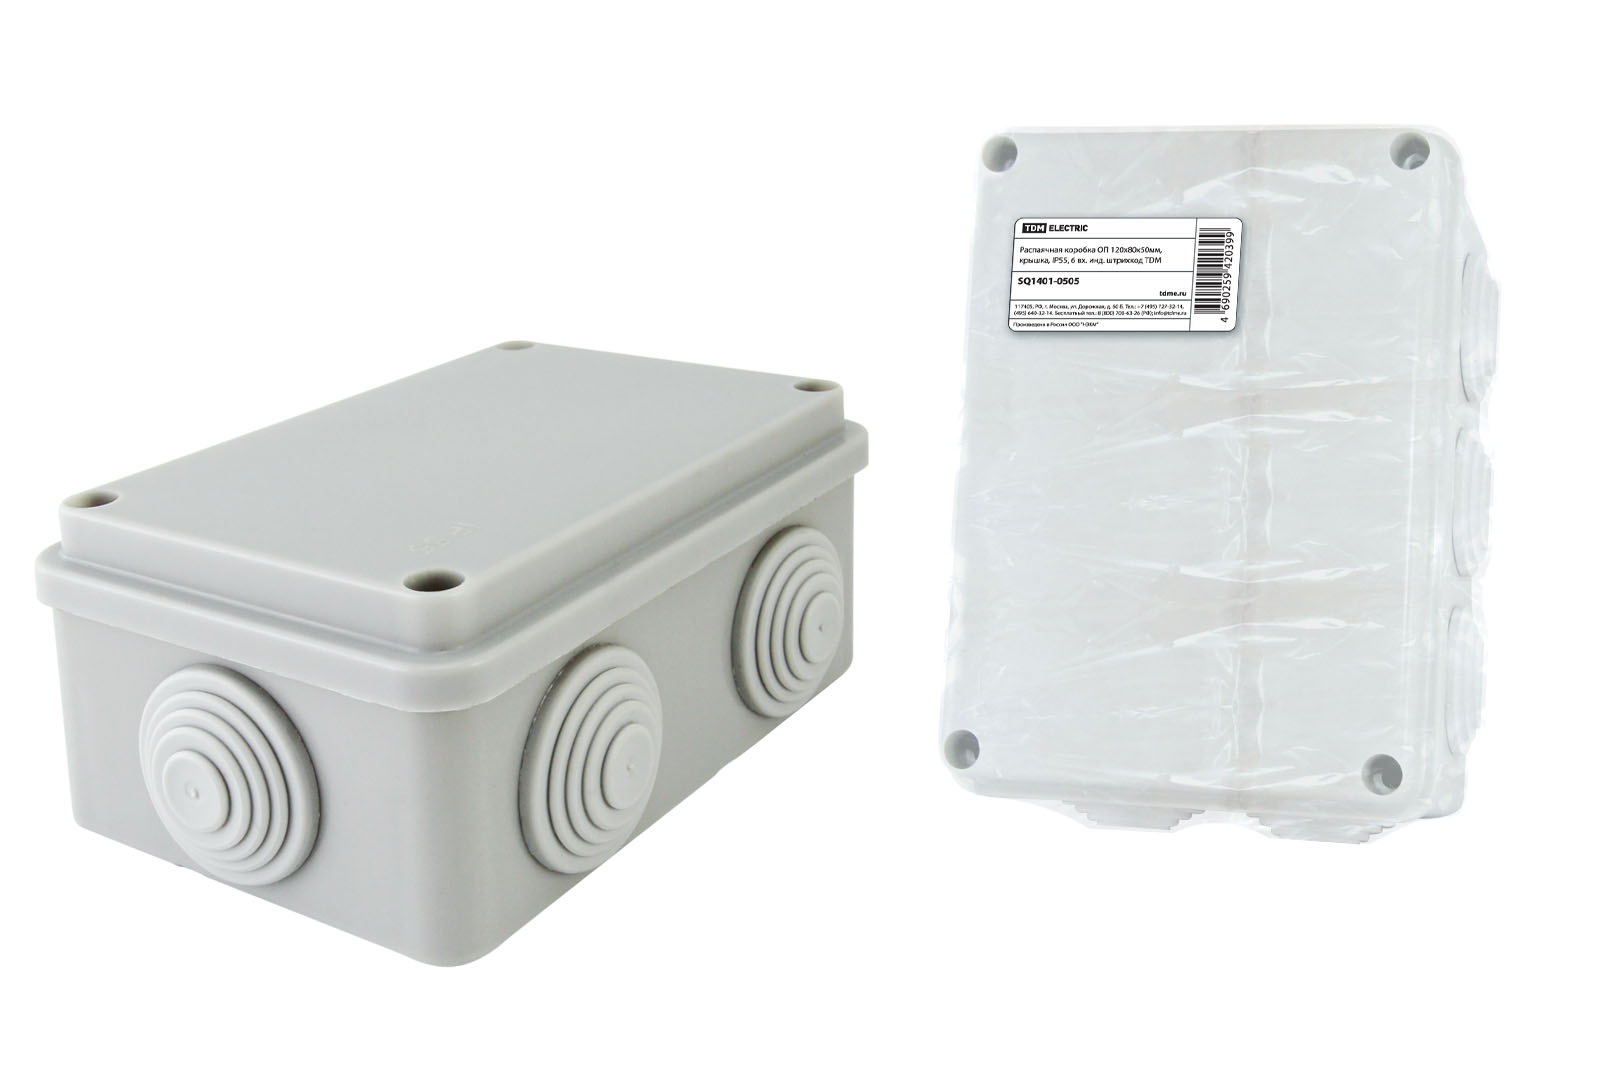 Распаячная коробка ОП 120х80х50мм, крышка, IP55, 6 вх. инд. штрихкод TDM SQ1401-0505 влагозащитная распаячная коробка mtg